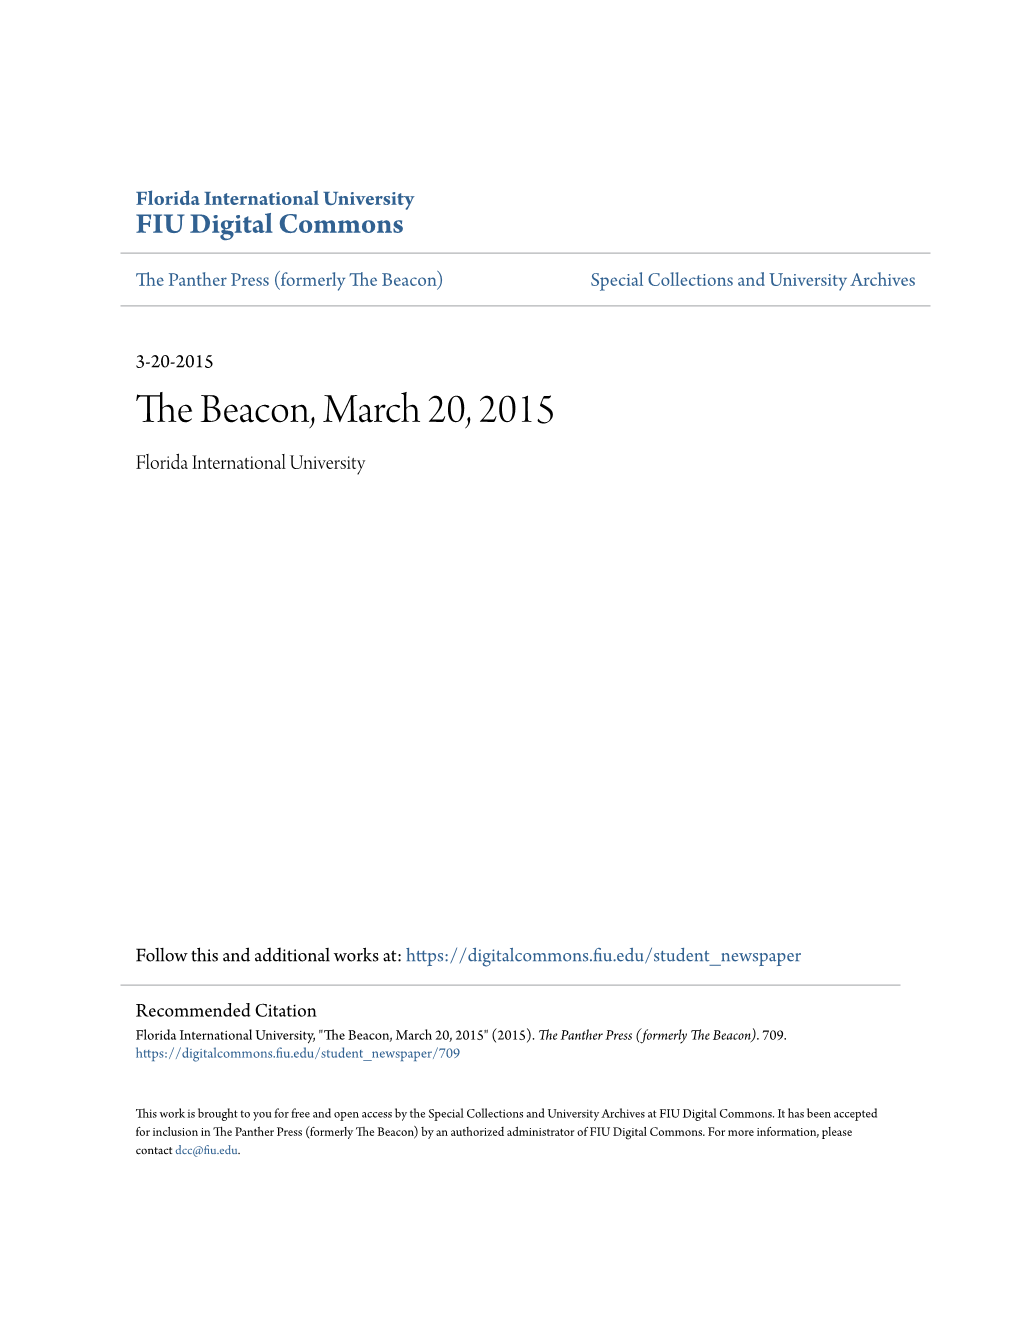 The Beacon, March 20, 2015 Florida International University